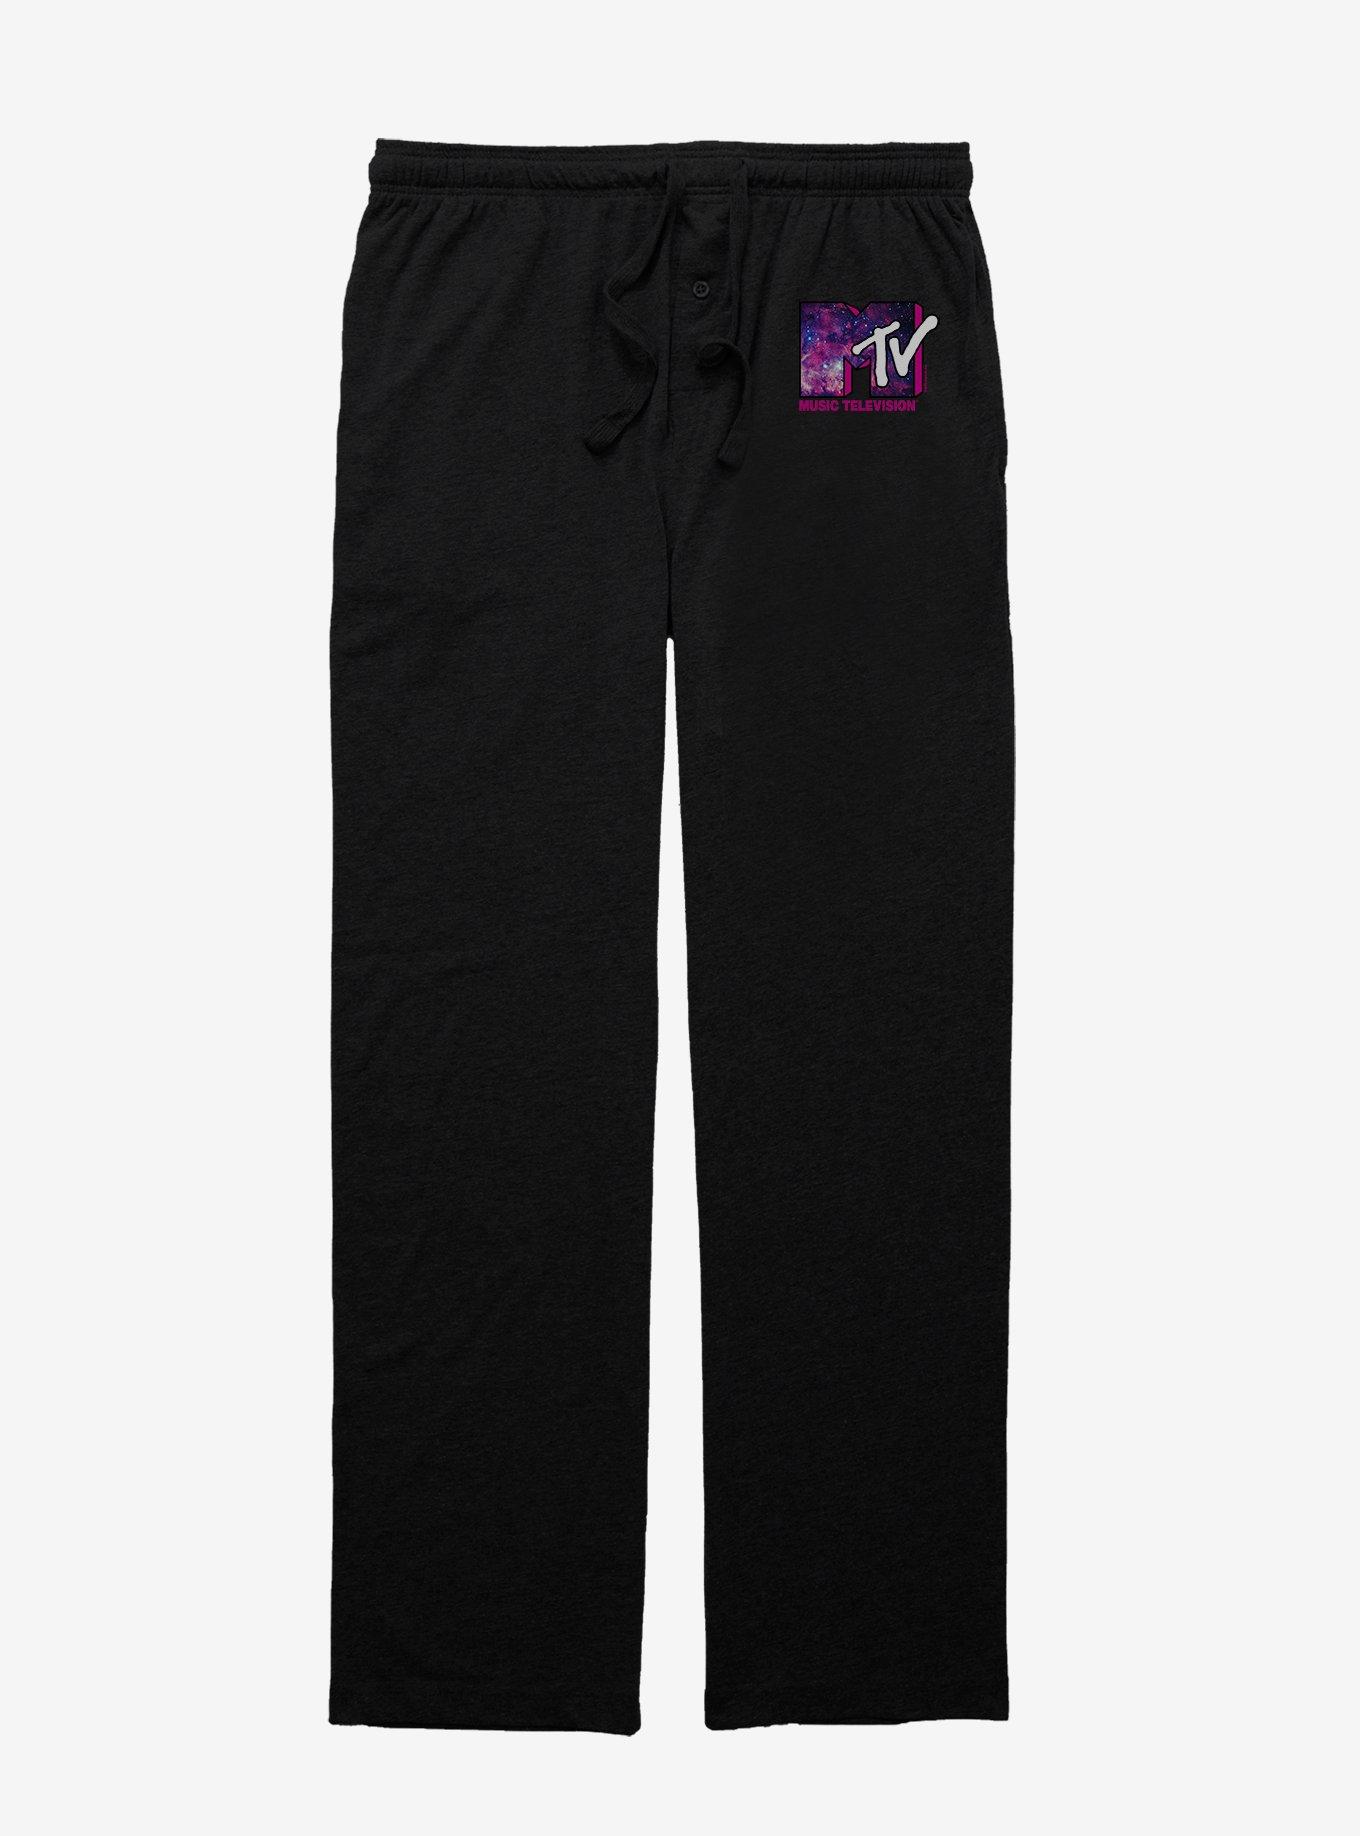 MTV Galaxy Fill Pajama Pants, BLACK, hi-res